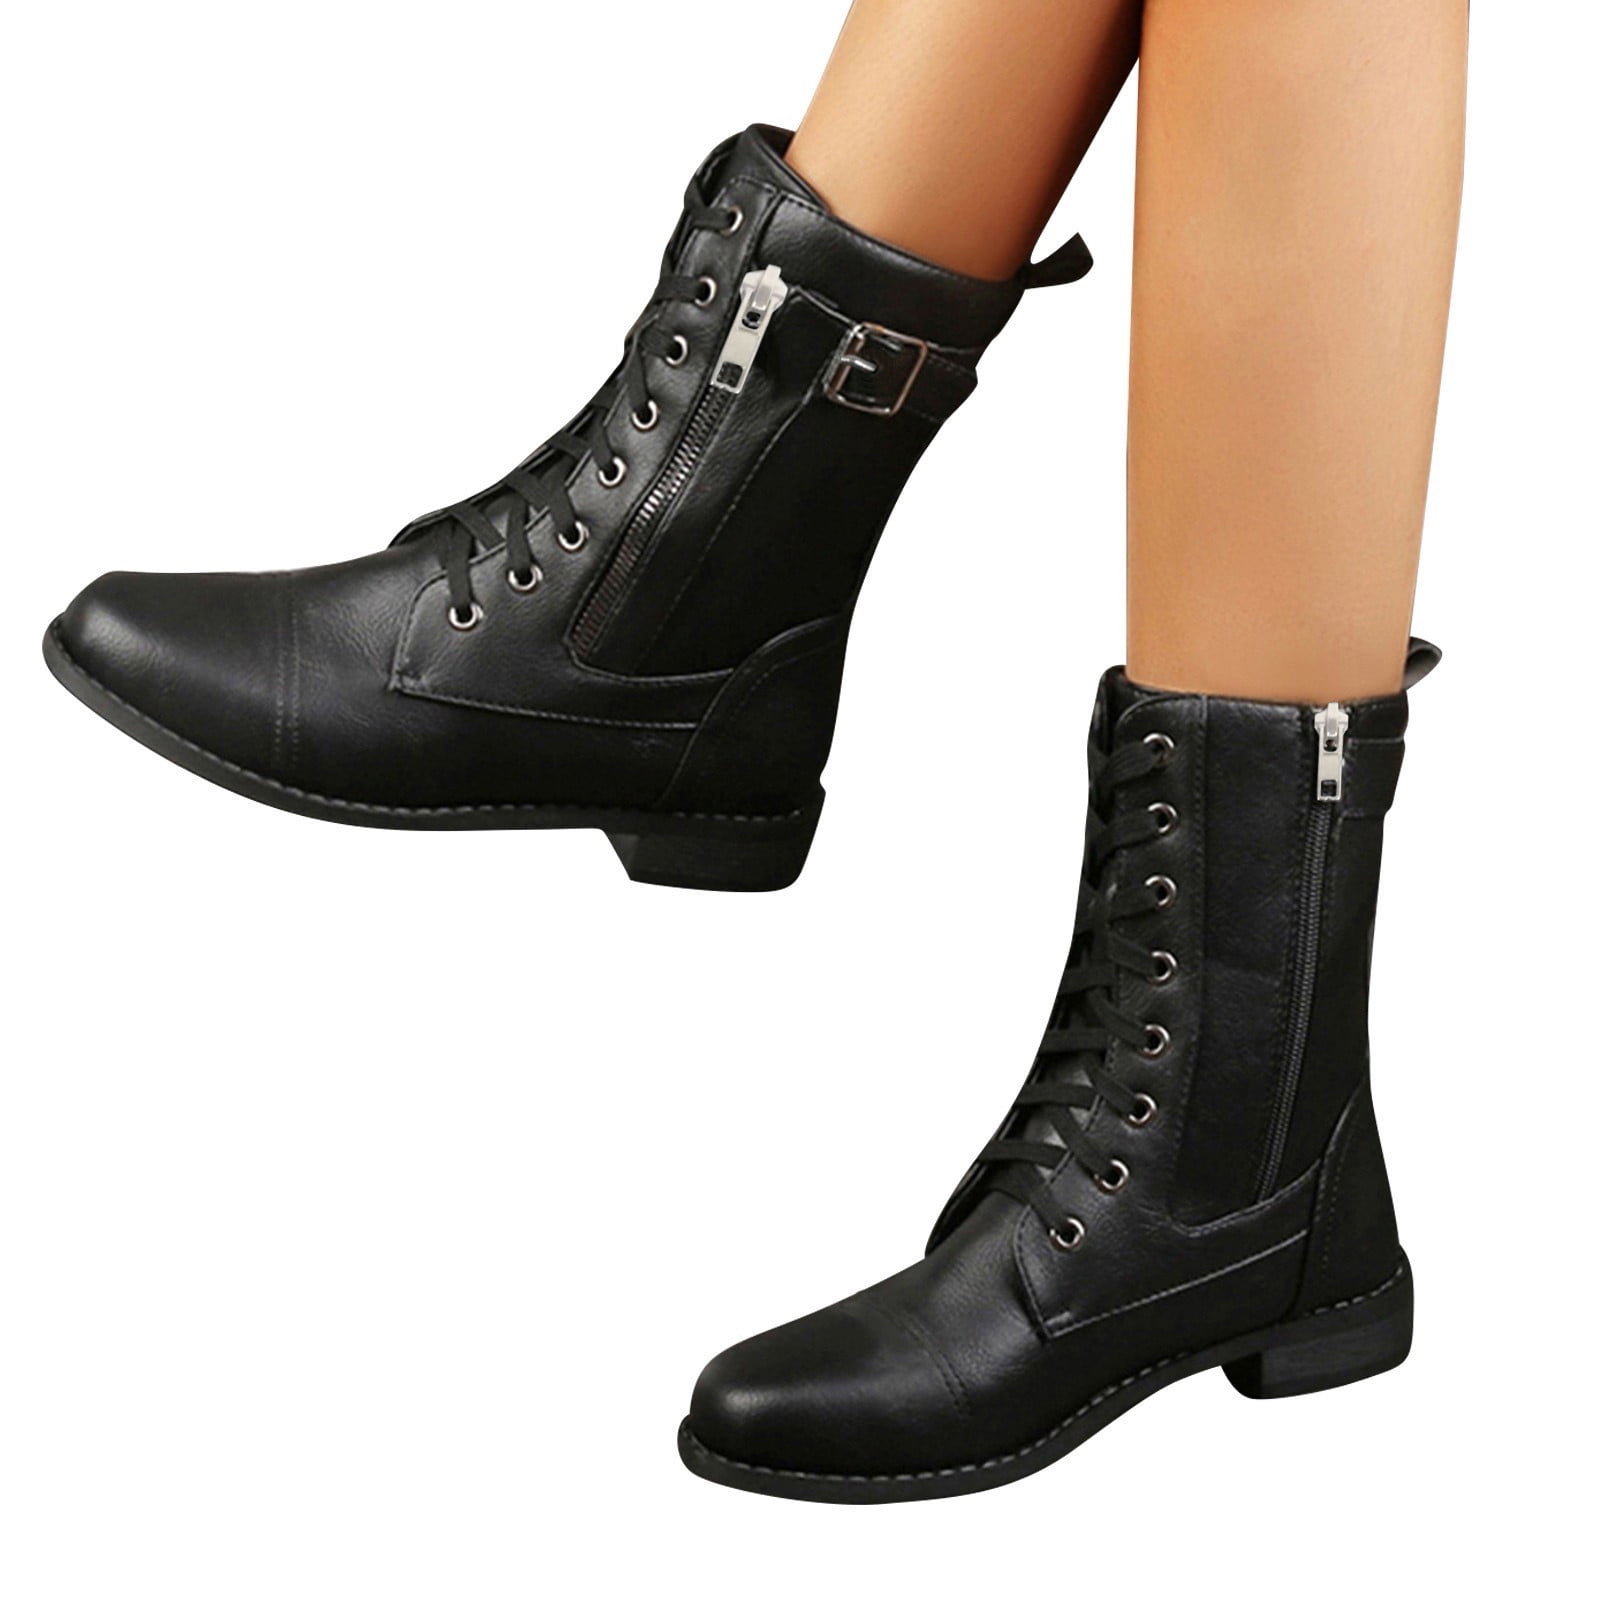 Entyinea Military Boots Women High Heel Mid Calf Boots for Women